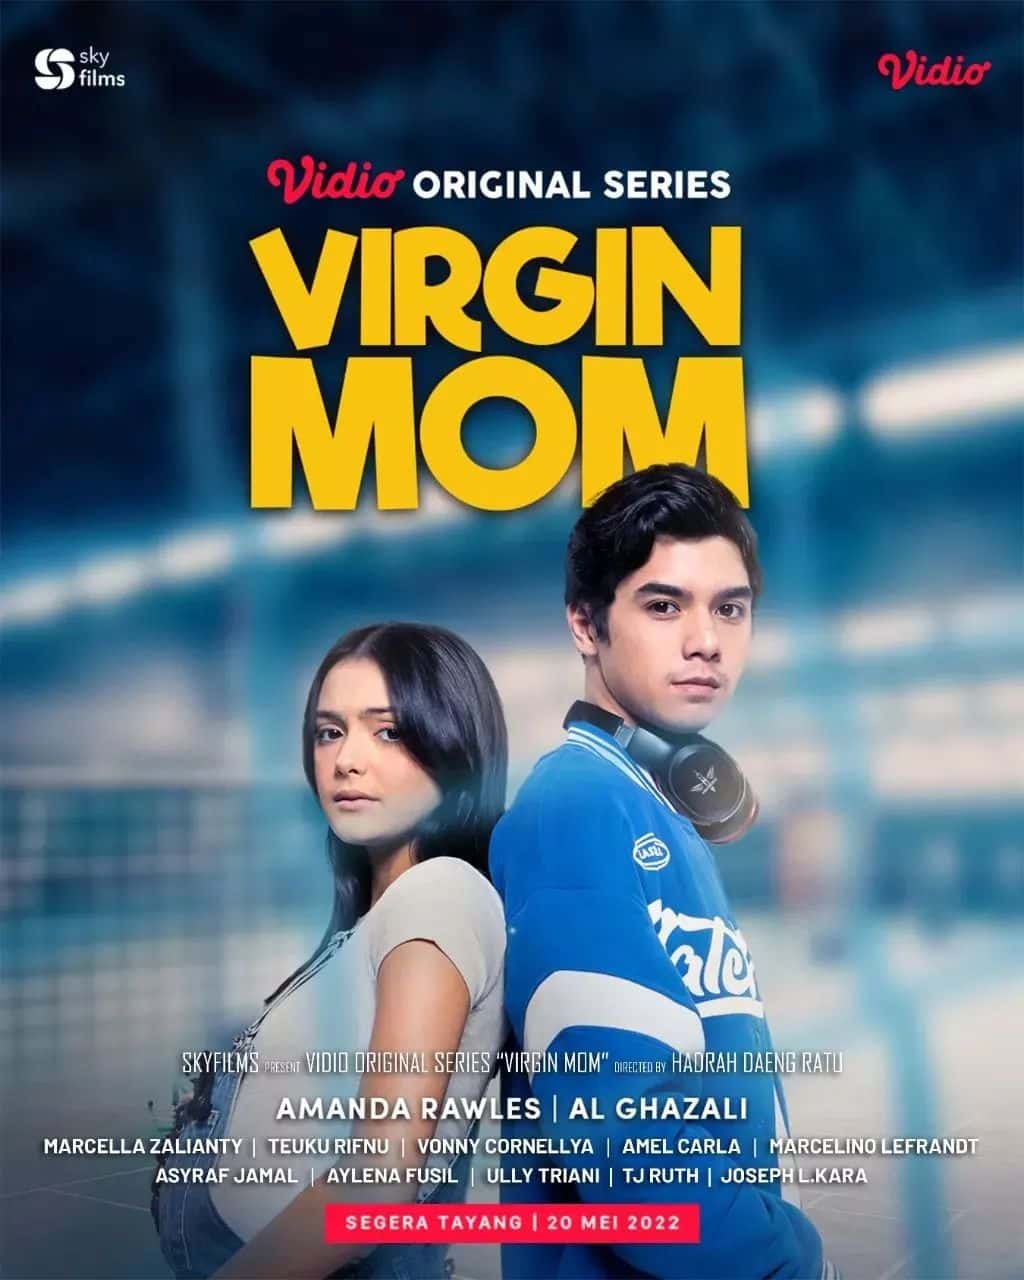 Virgin Mom - Sinopsis, Pemain, OST, Episode. Review